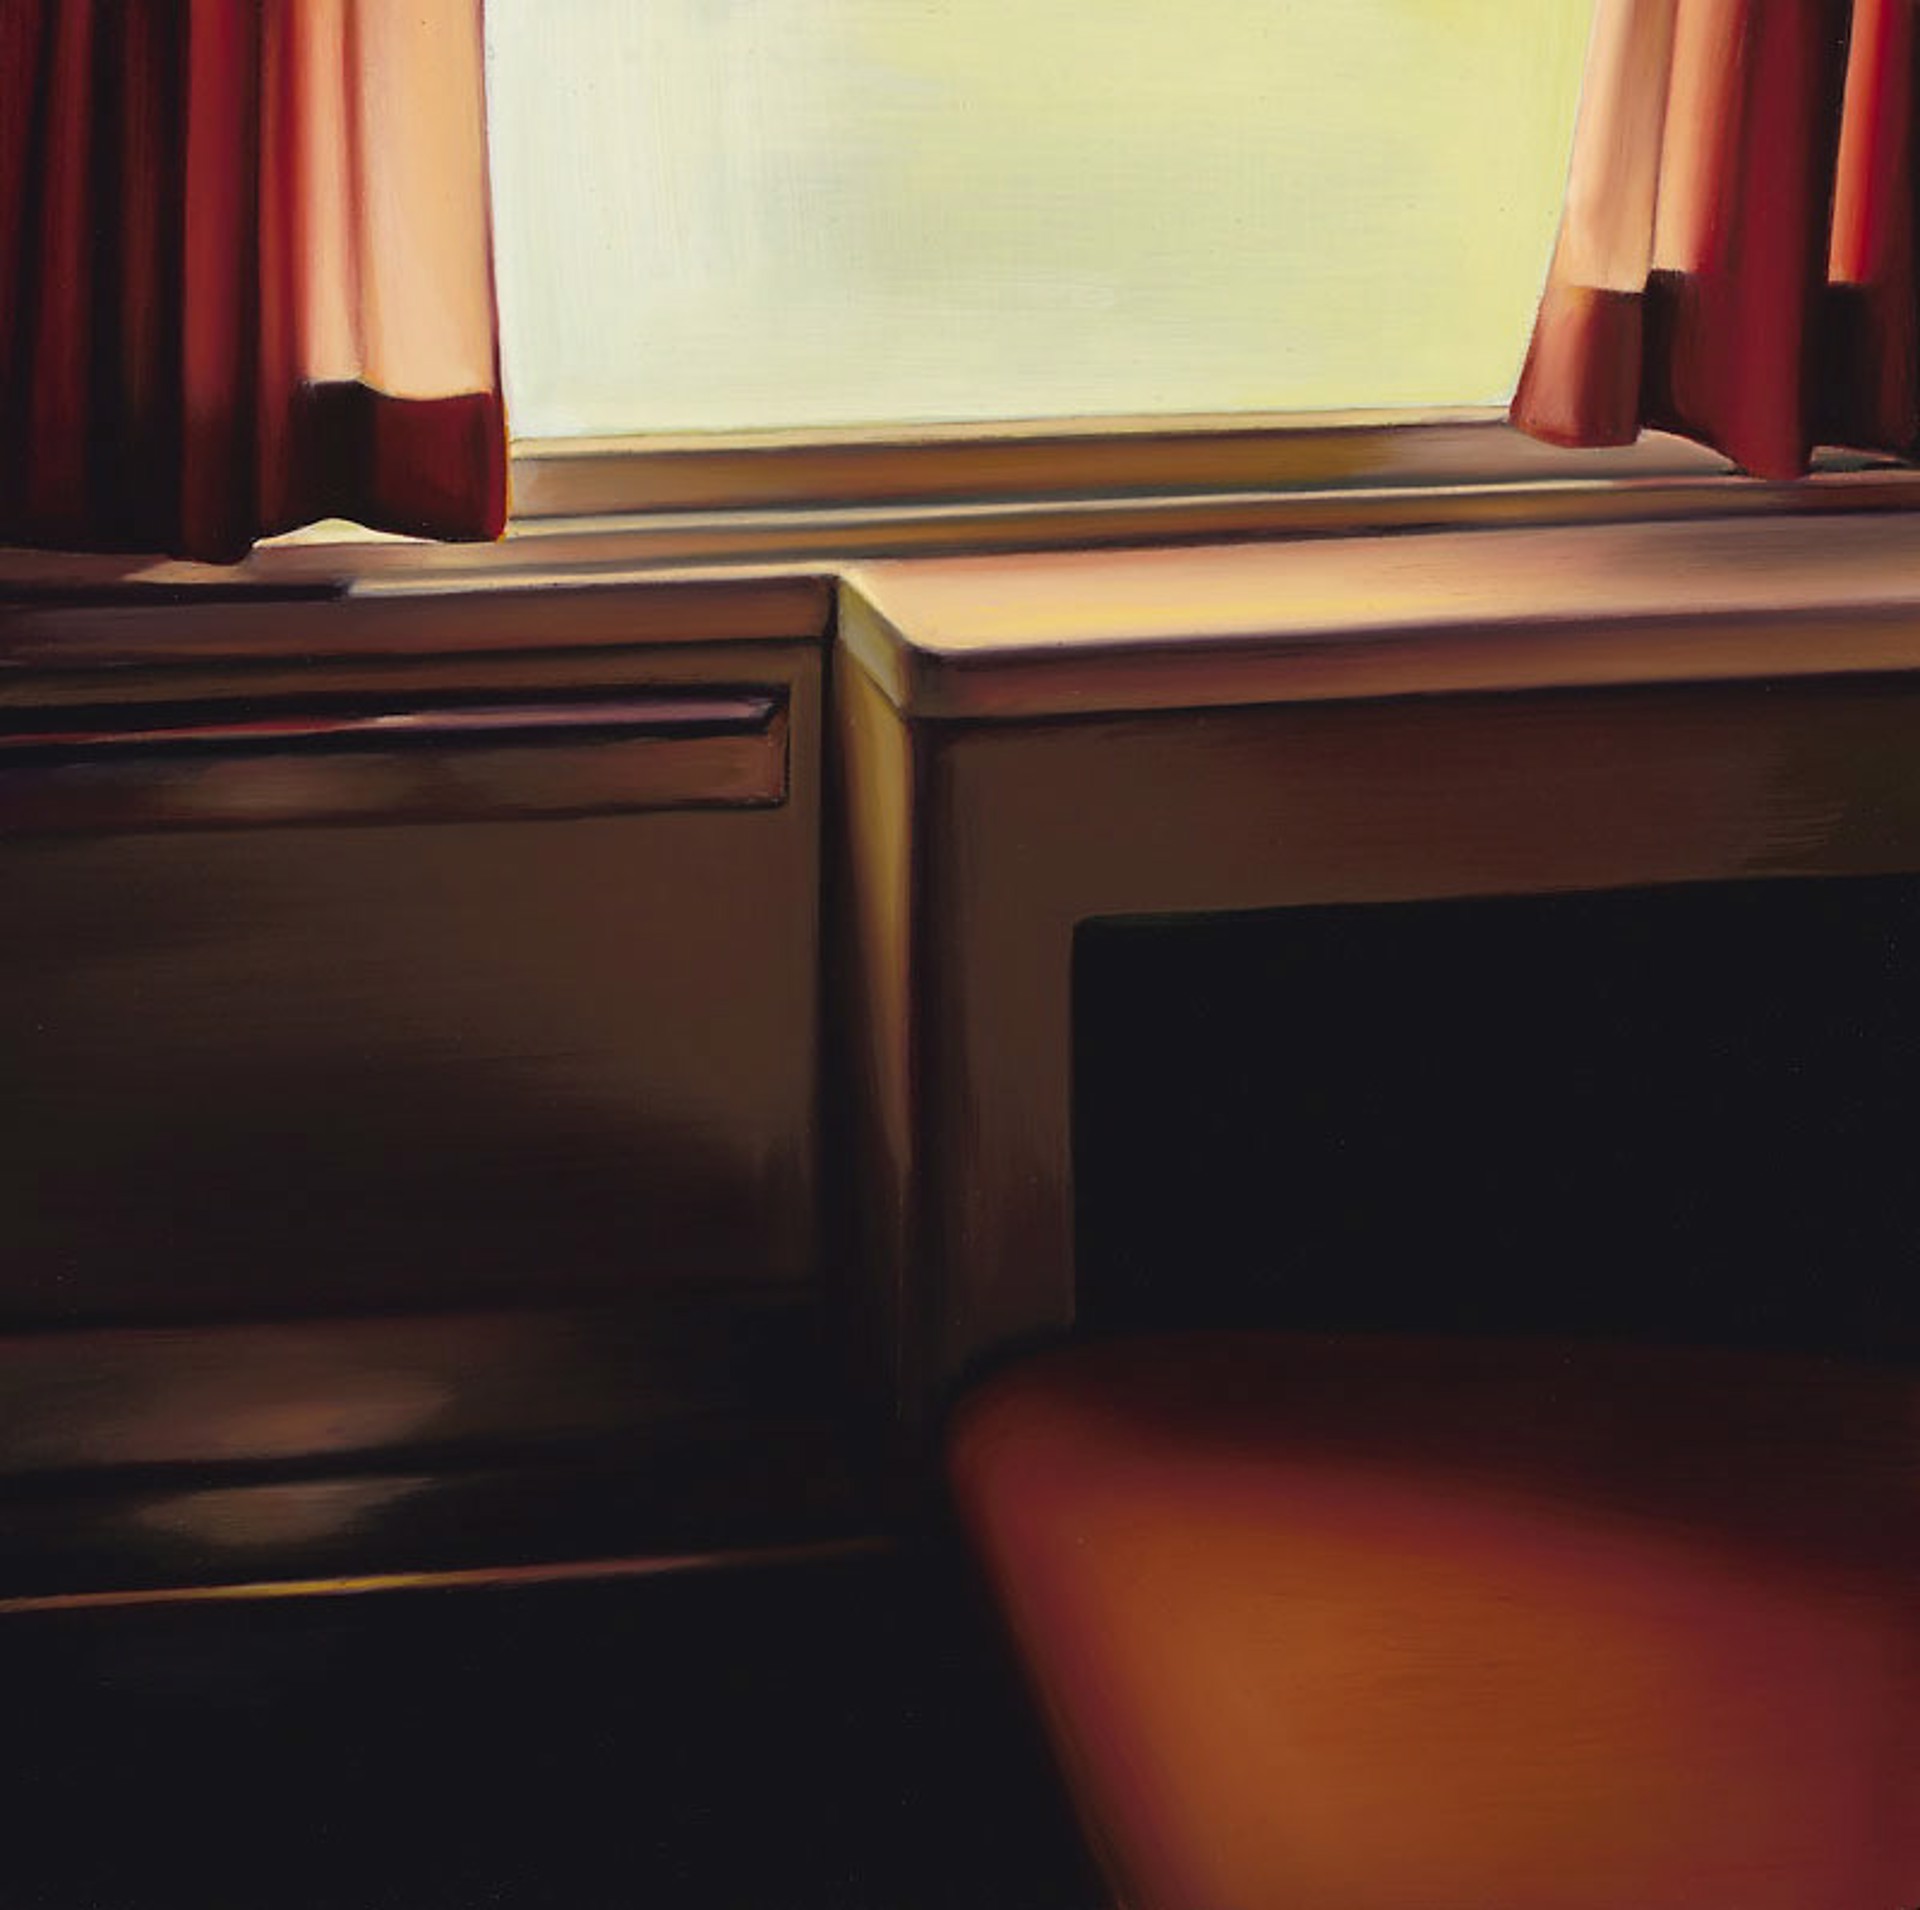 Train Chair #44 by Ada Sadler